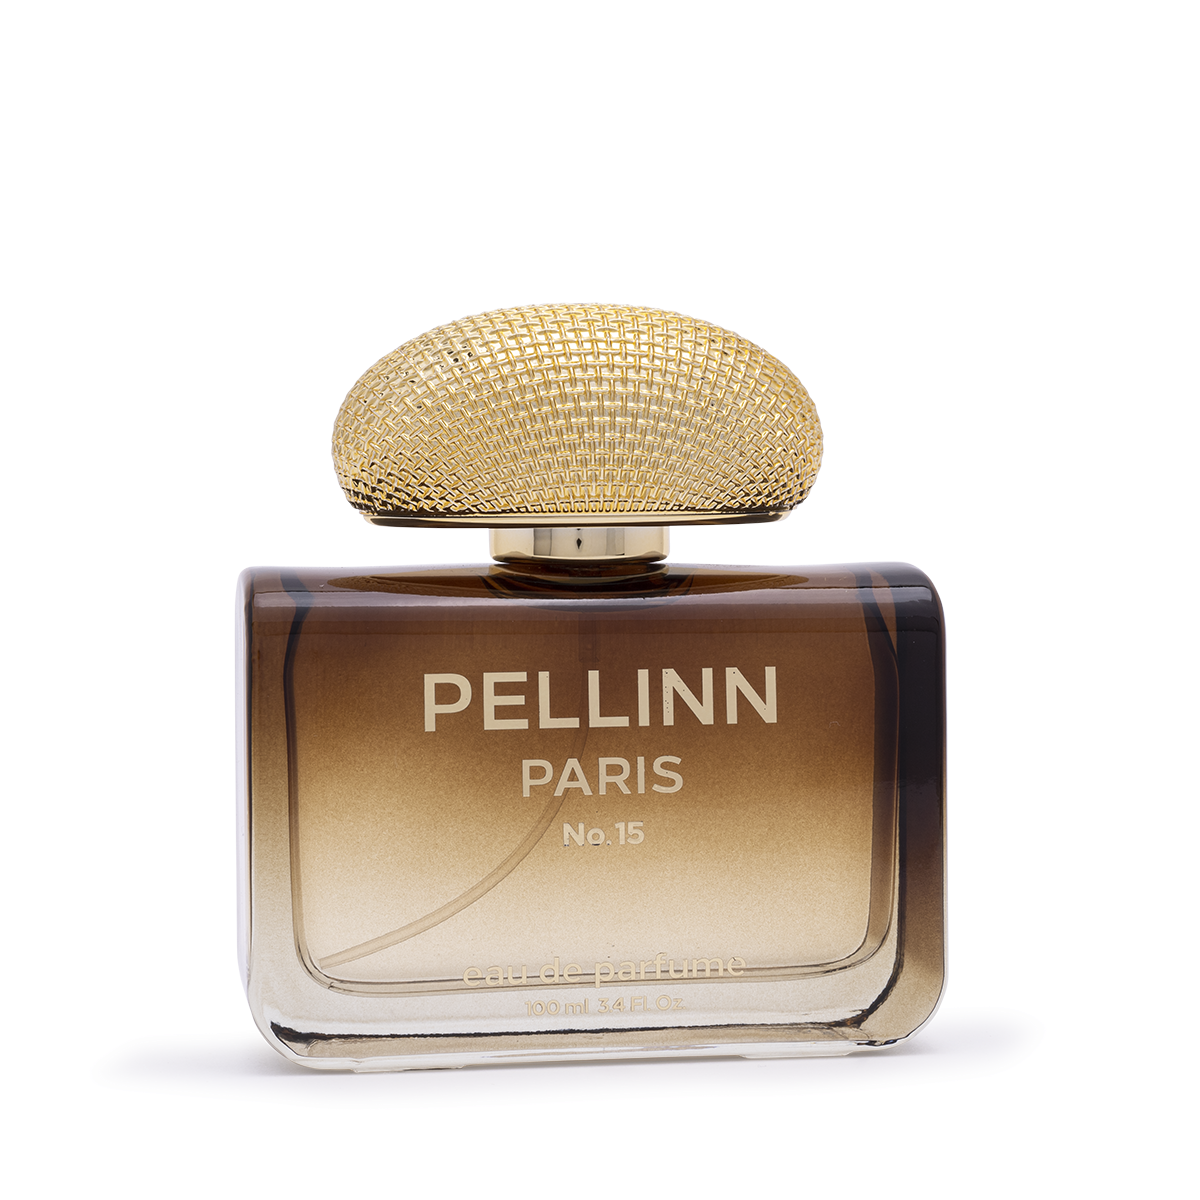 Pellinn Paris No.15 Çiçeksi ve Meyveli Kadın EDP Parfüm 100 ml  Pellinn Paris Parfüm